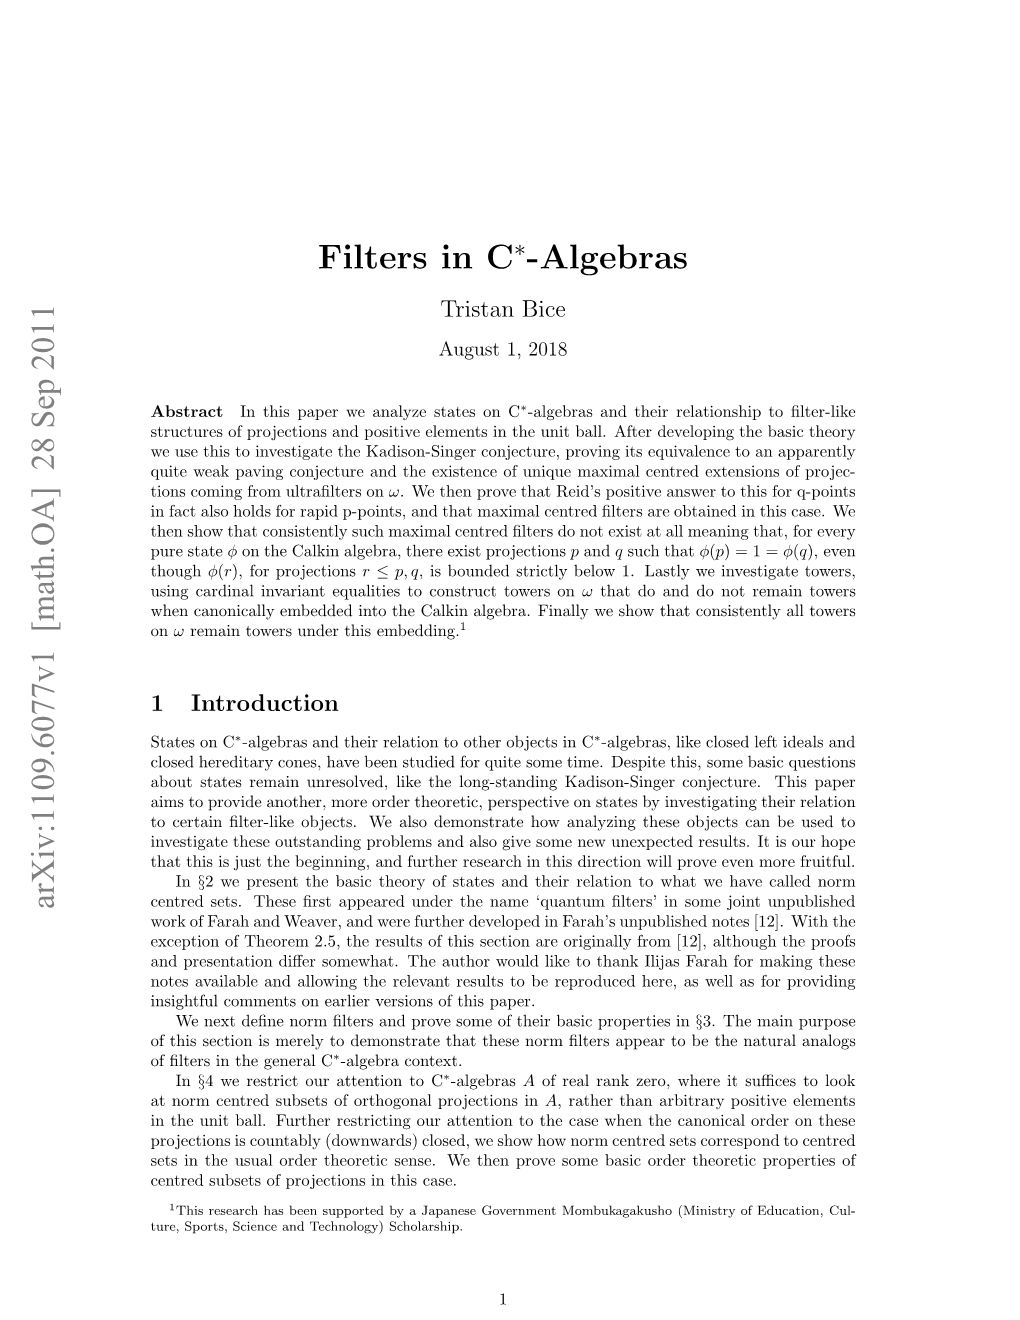 Filters in C*-Algebras